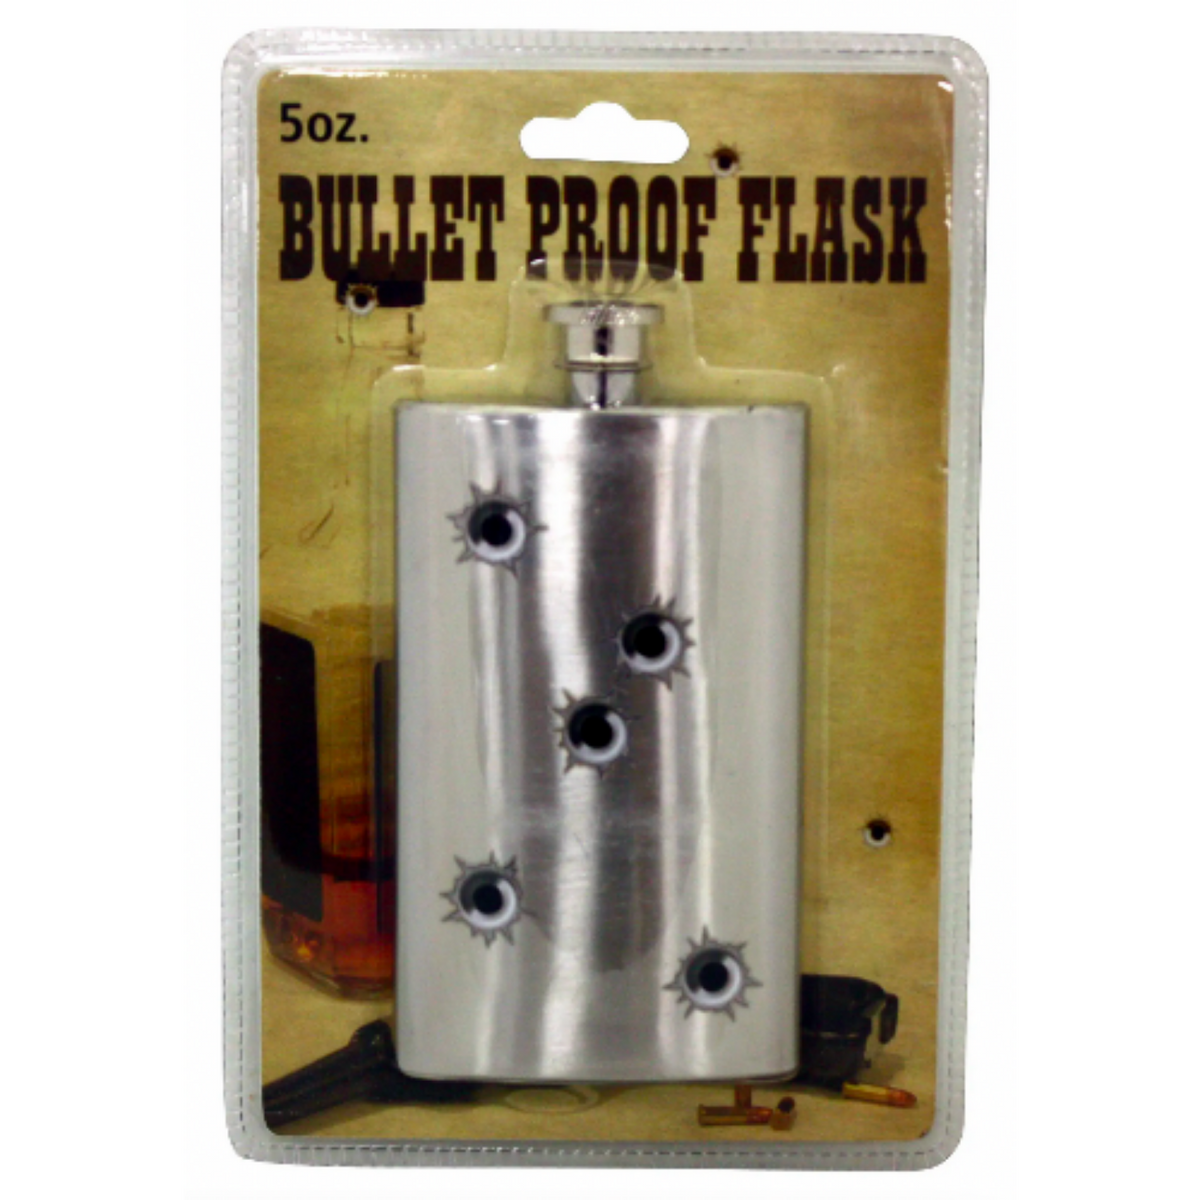 Bullet Hole Flask